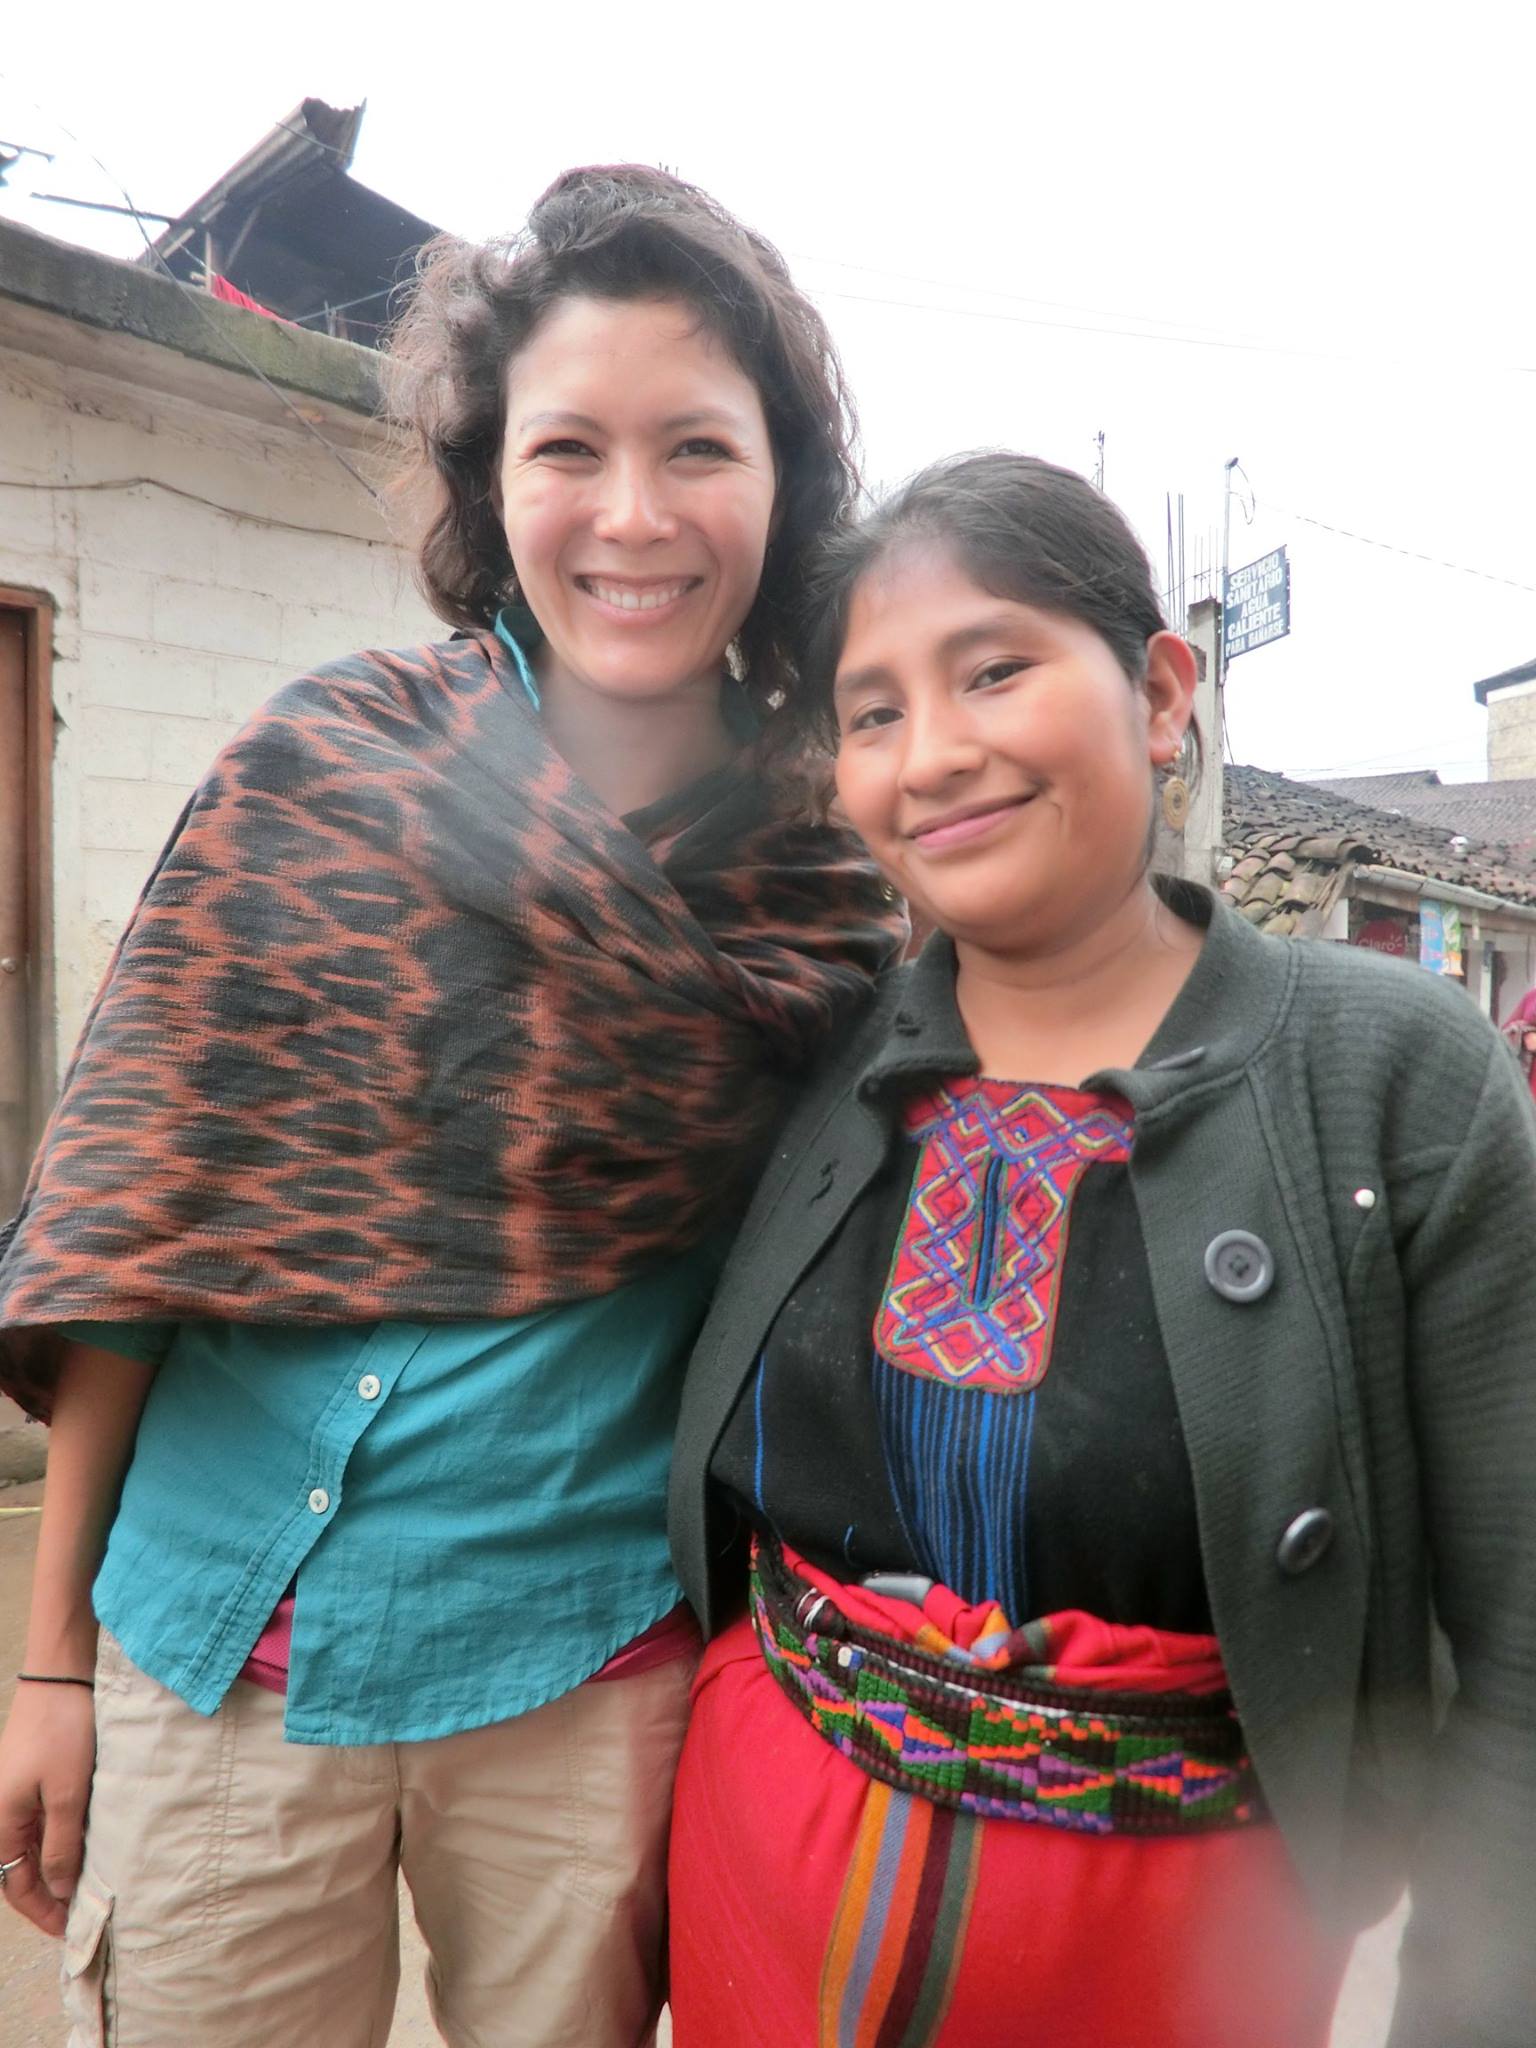 30-min Guatemala travel advice call with Mari